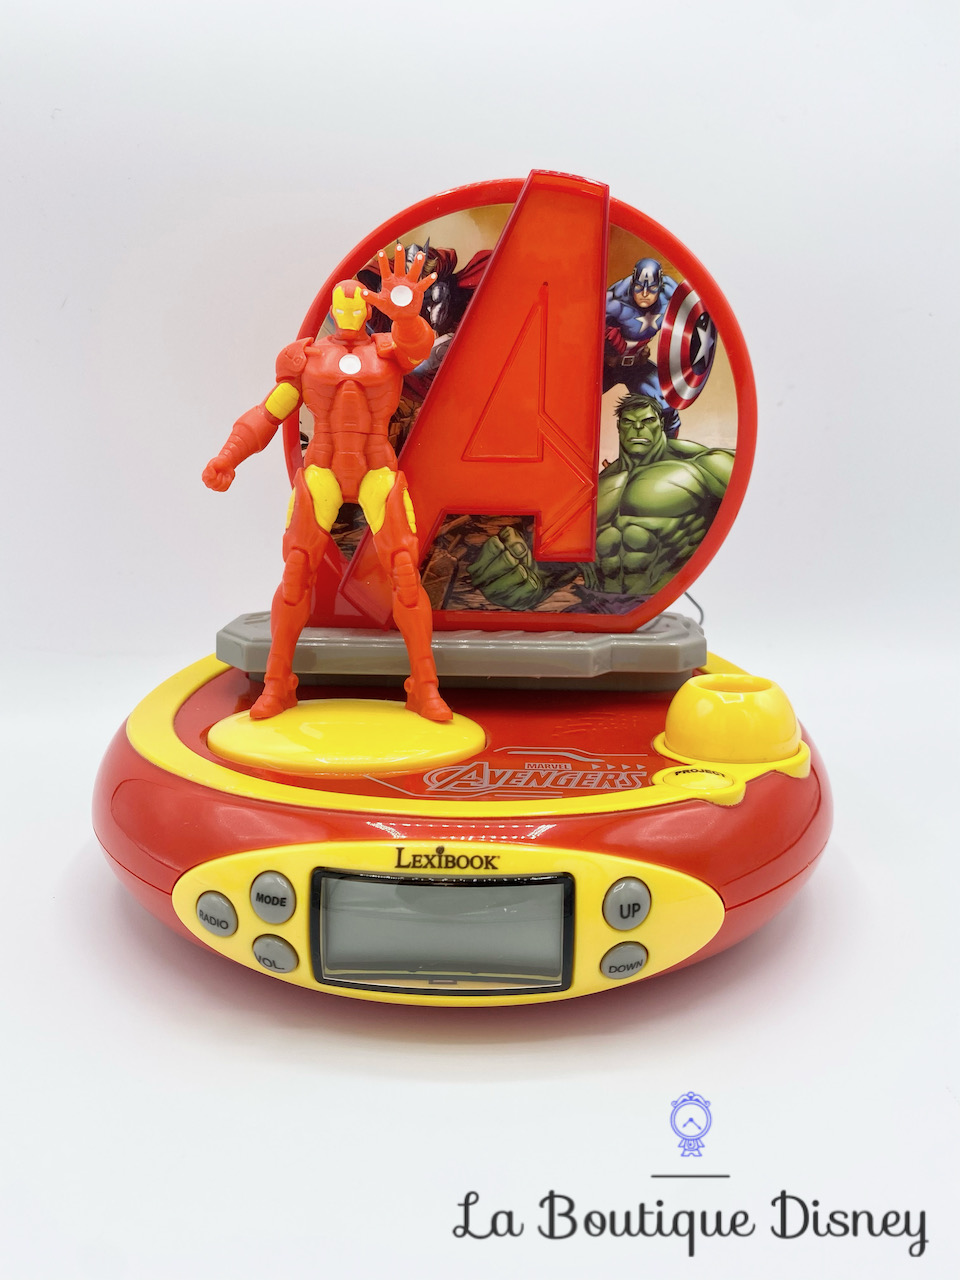 Radio Réveil Iron Man Avengers Marvel Lexibook Disney Projecteur rouge horloge